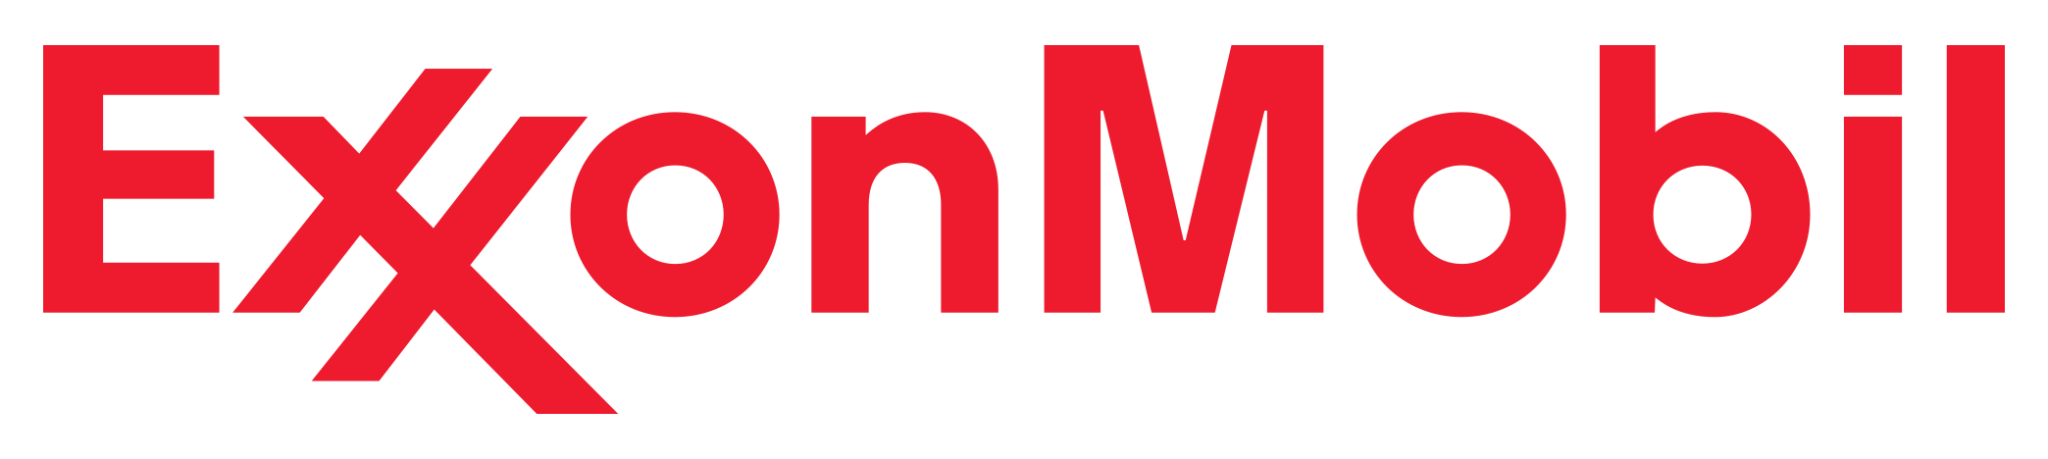 exxonmobil-logo-2048x459